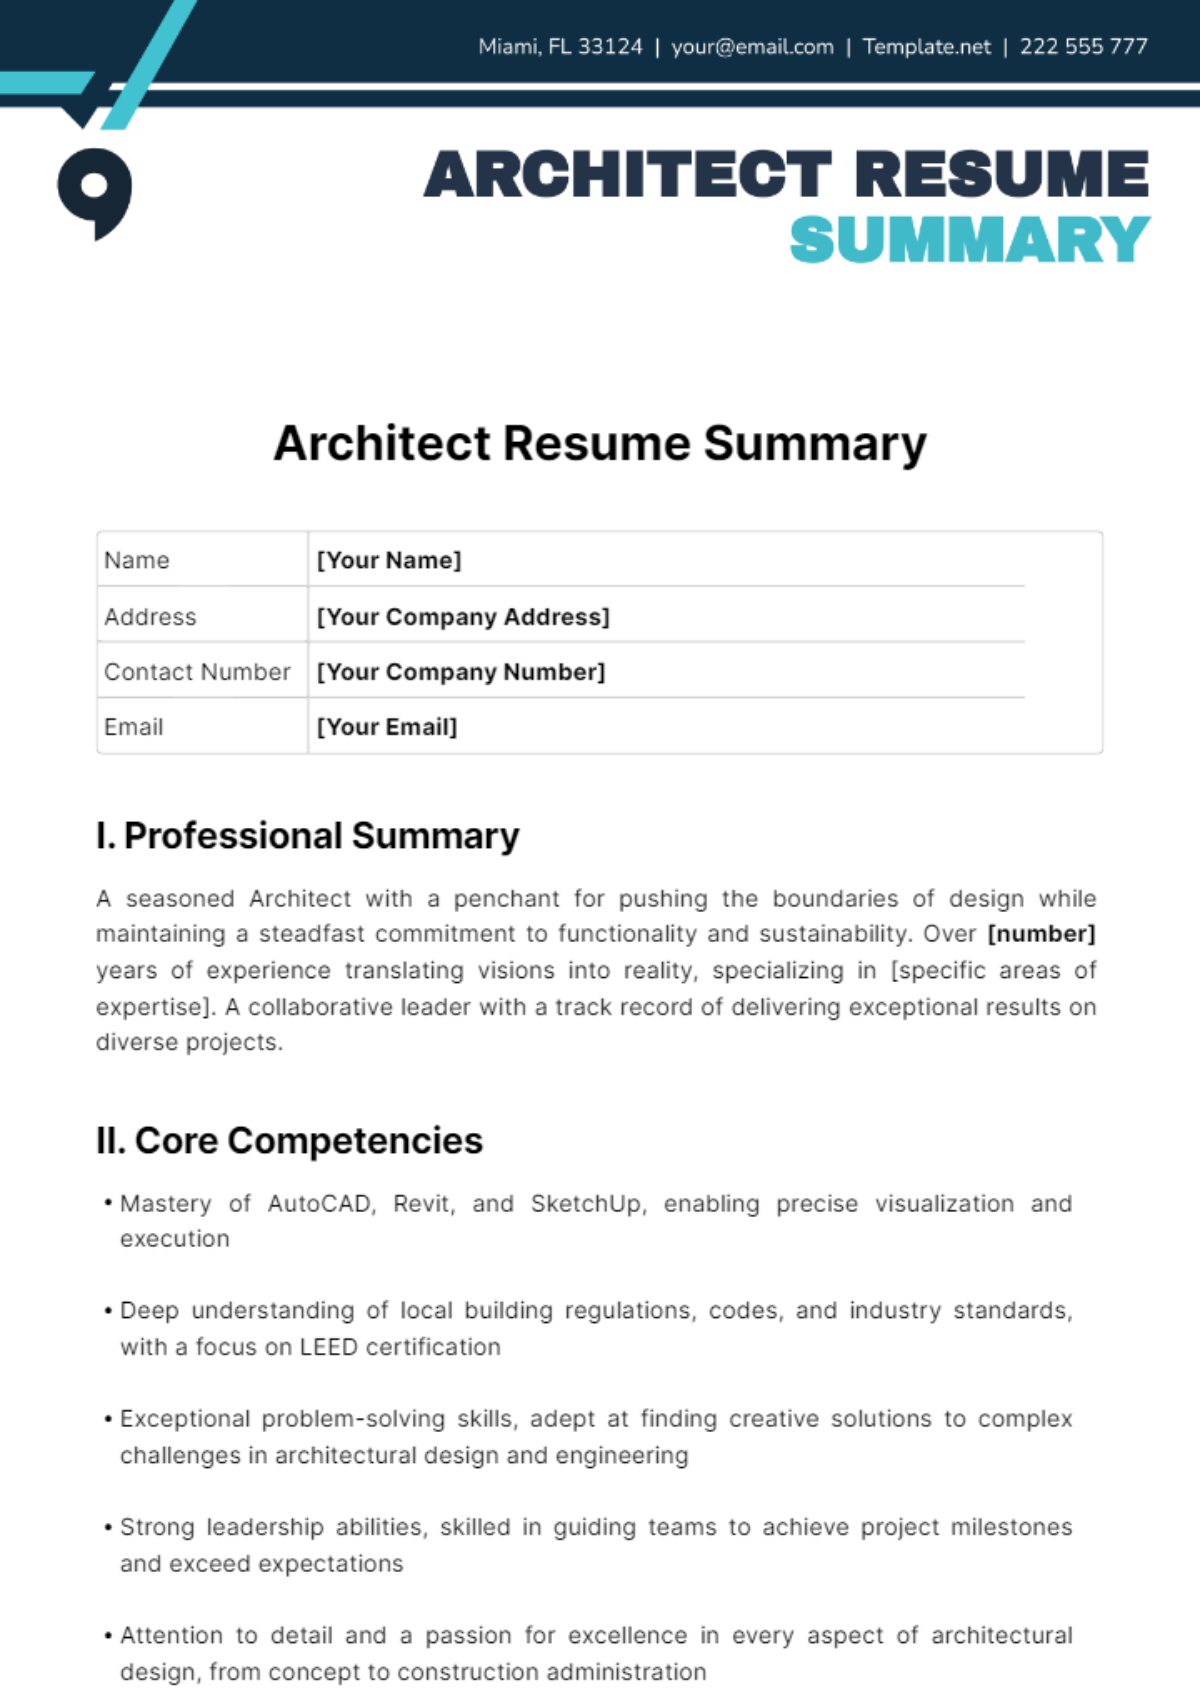 Architect Resume Summary Template